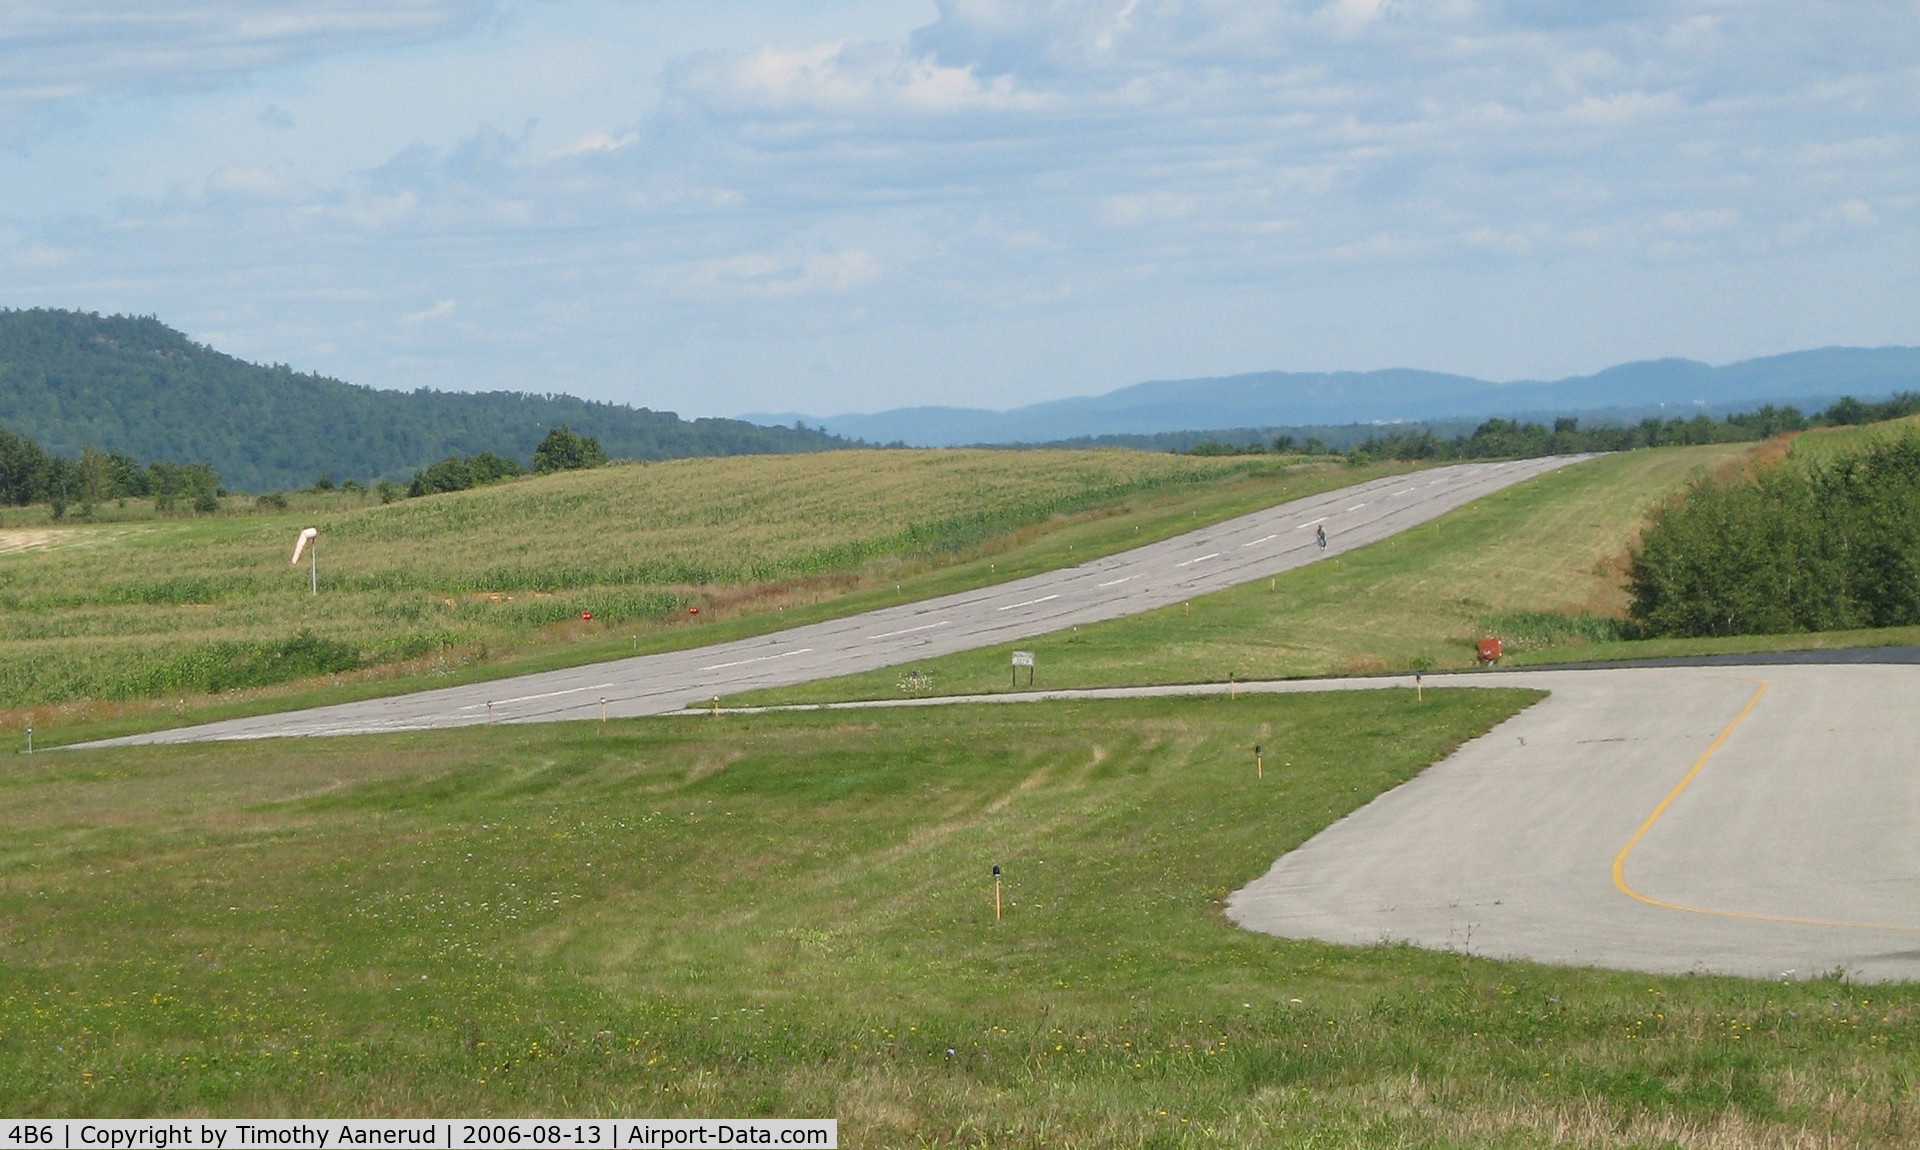 Ticonderoga Municipal Airport (4B6) - The runway